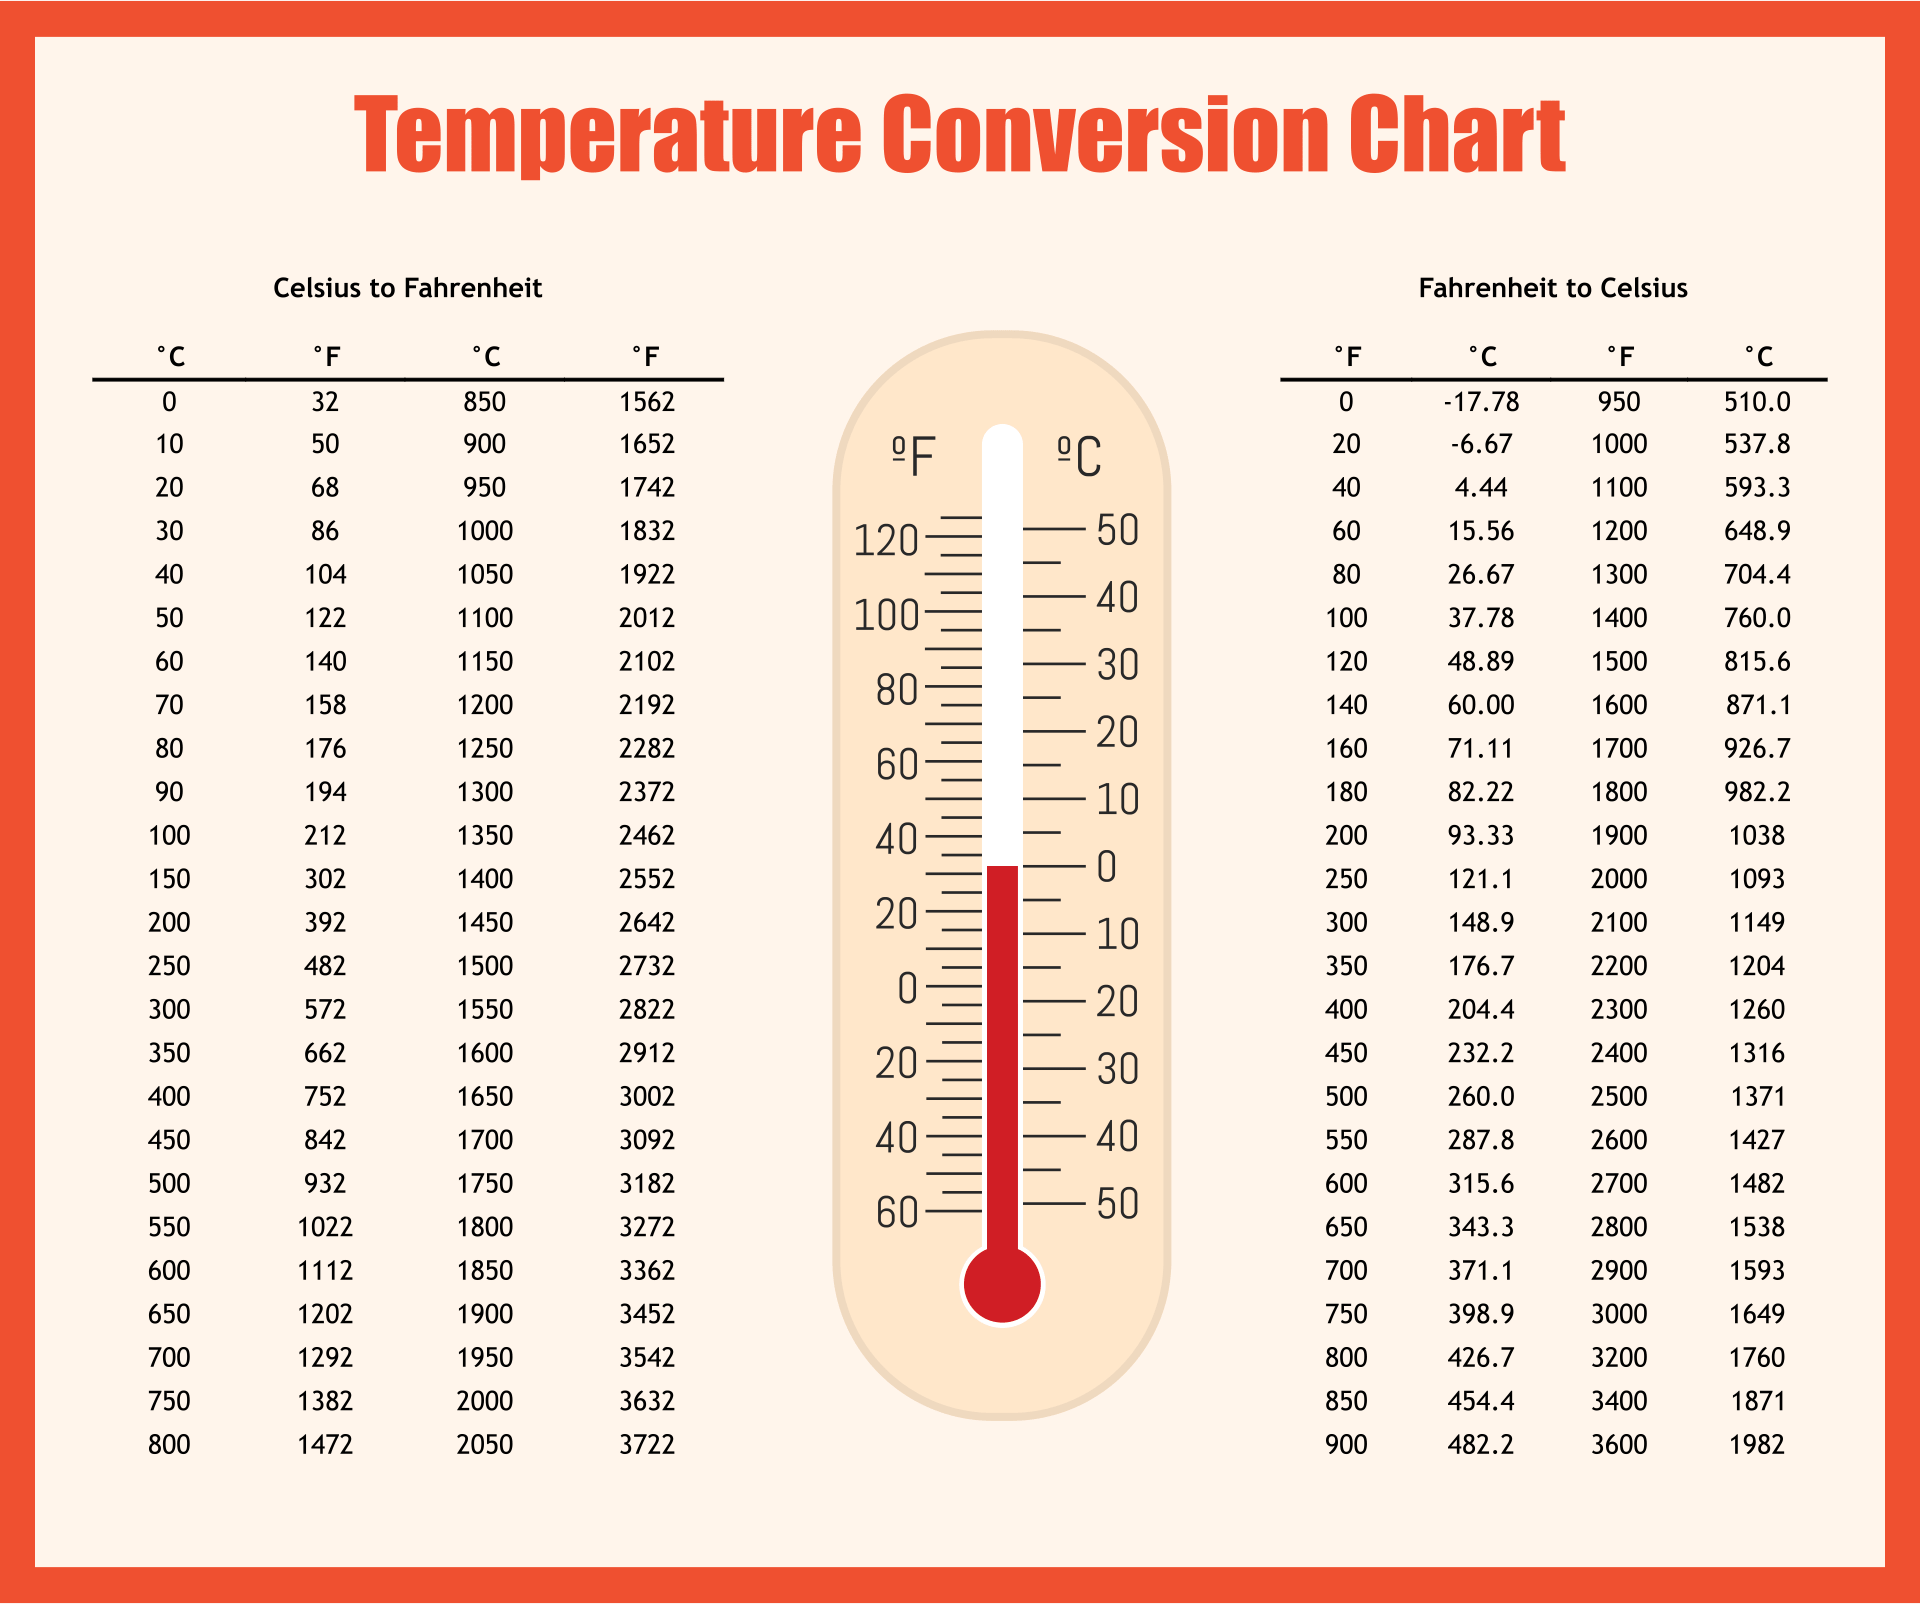 Celsius To Fahrenheit Conversion For